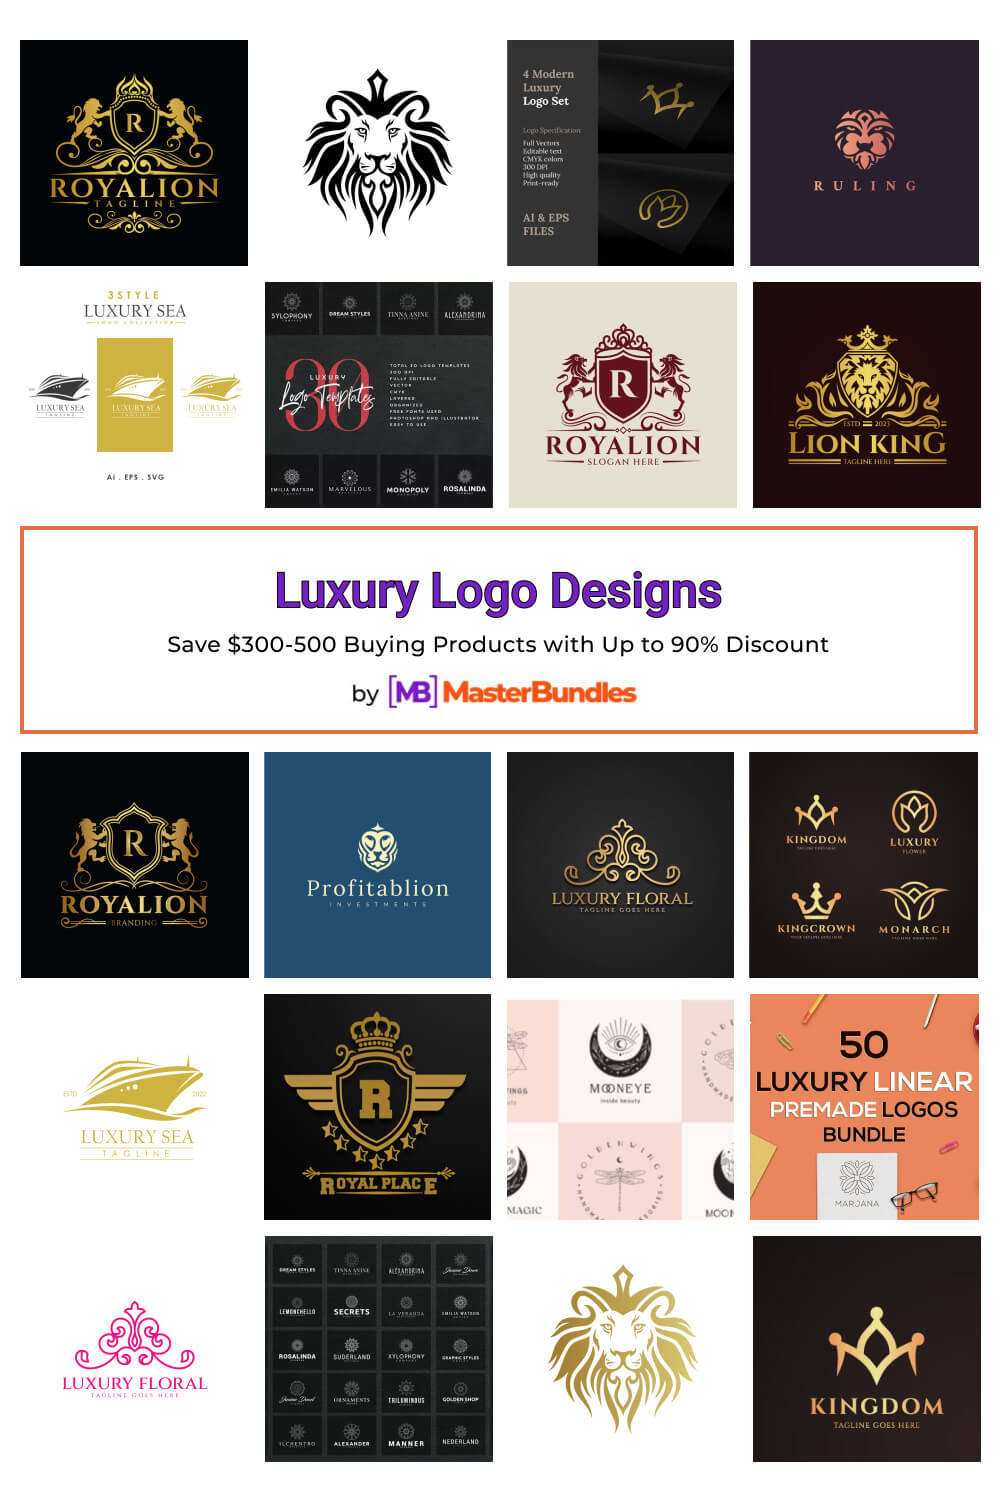 luxury logo designs pinterest image.